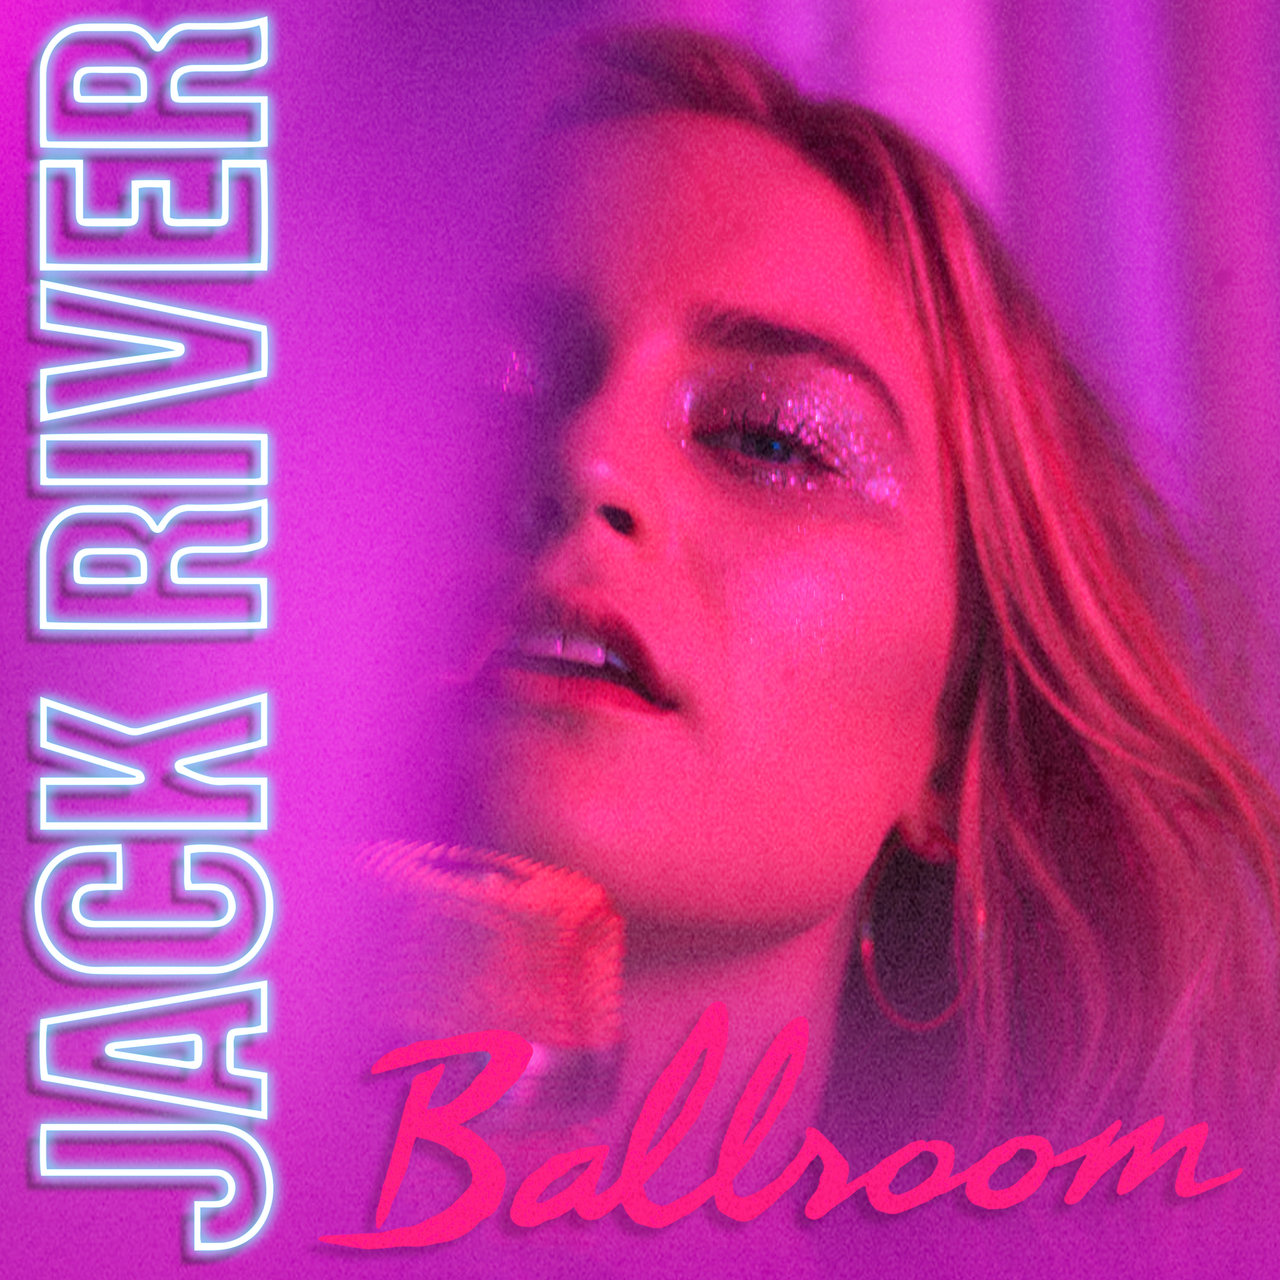 Jack River Ballroom cover artwork